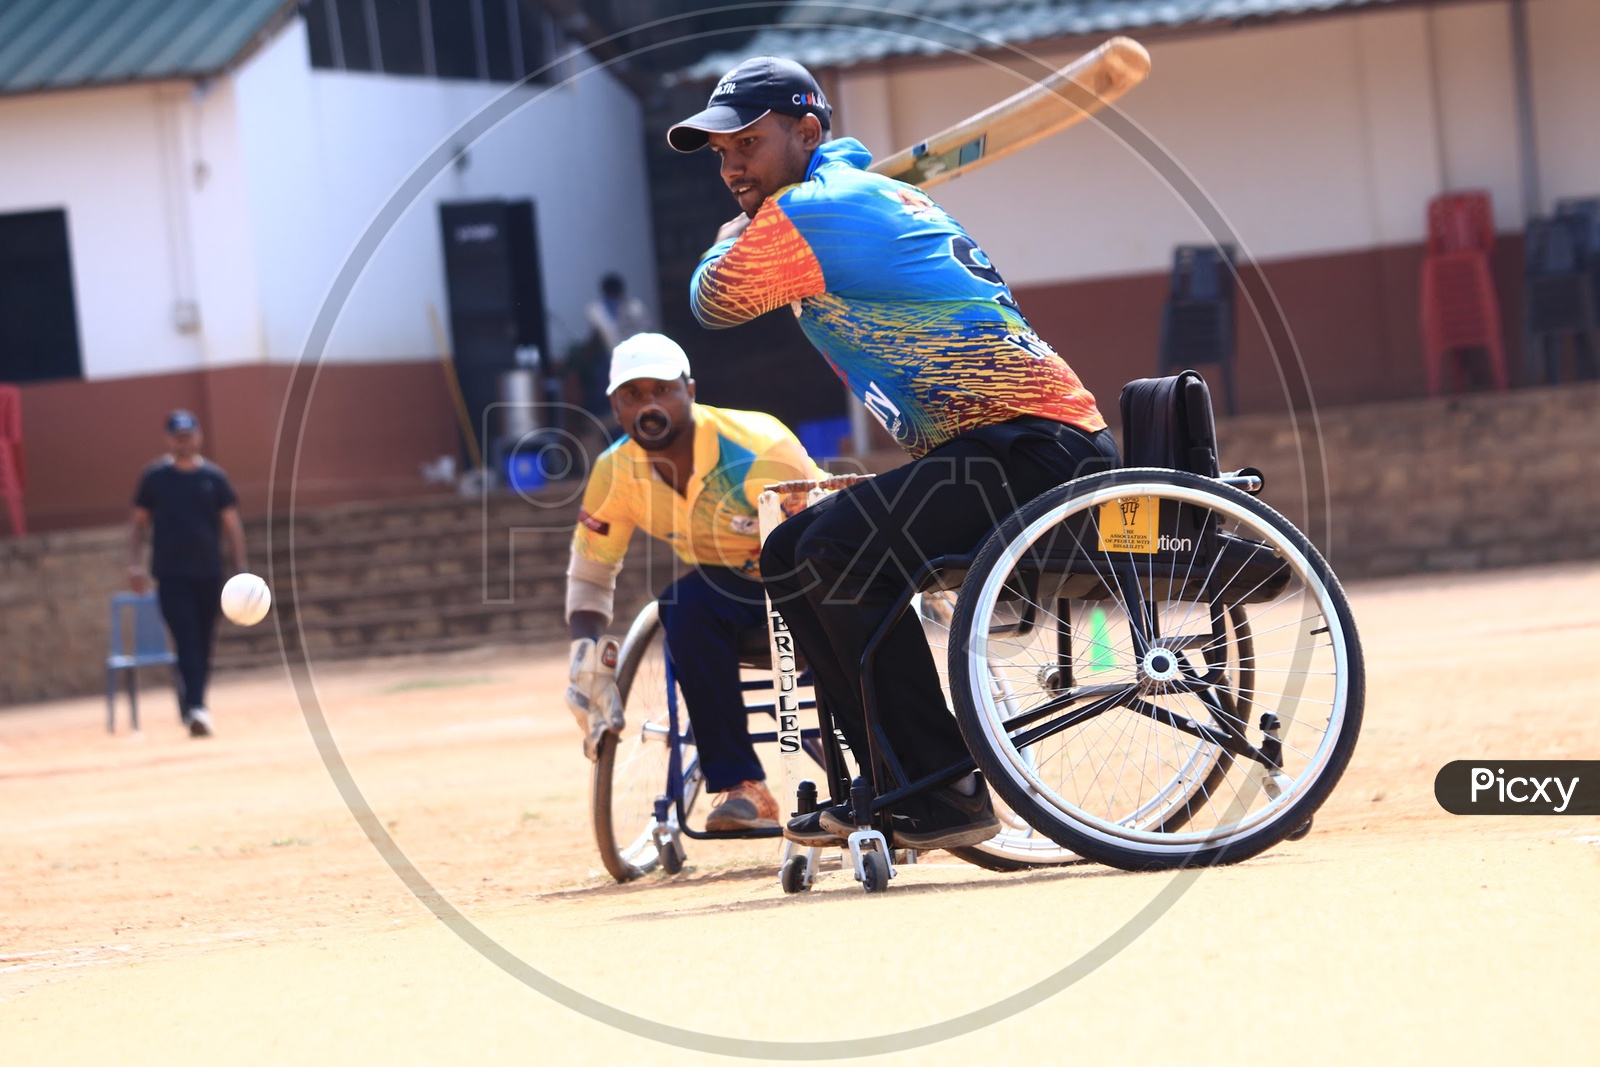 Wheelchair cricket